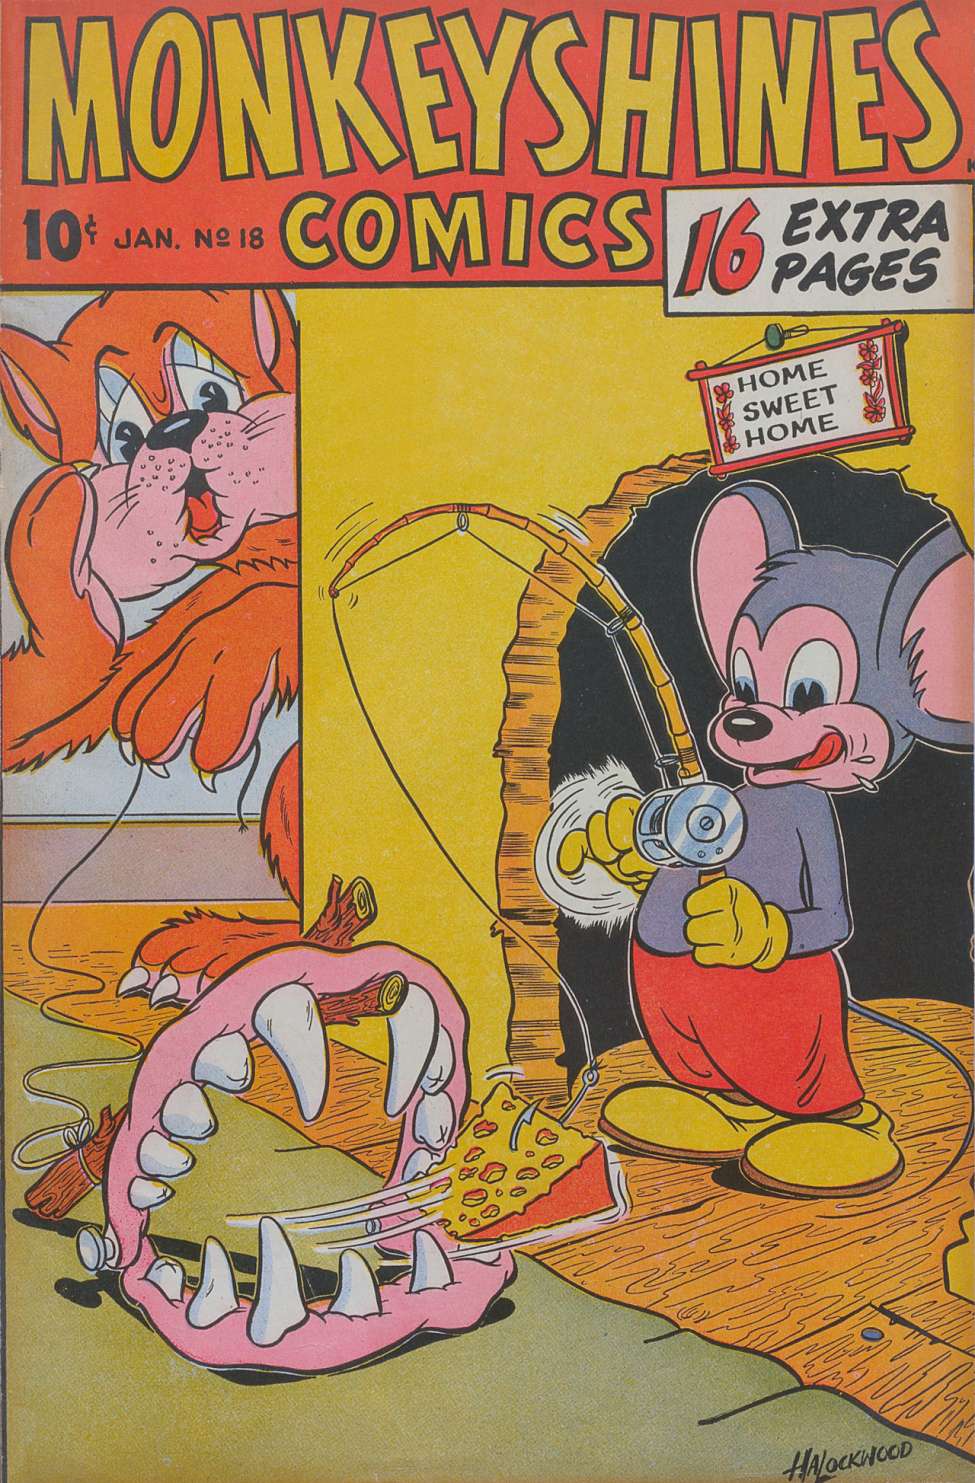 Monkeyshines Comics 18 (Ace Magazines) - Comic Book Plus